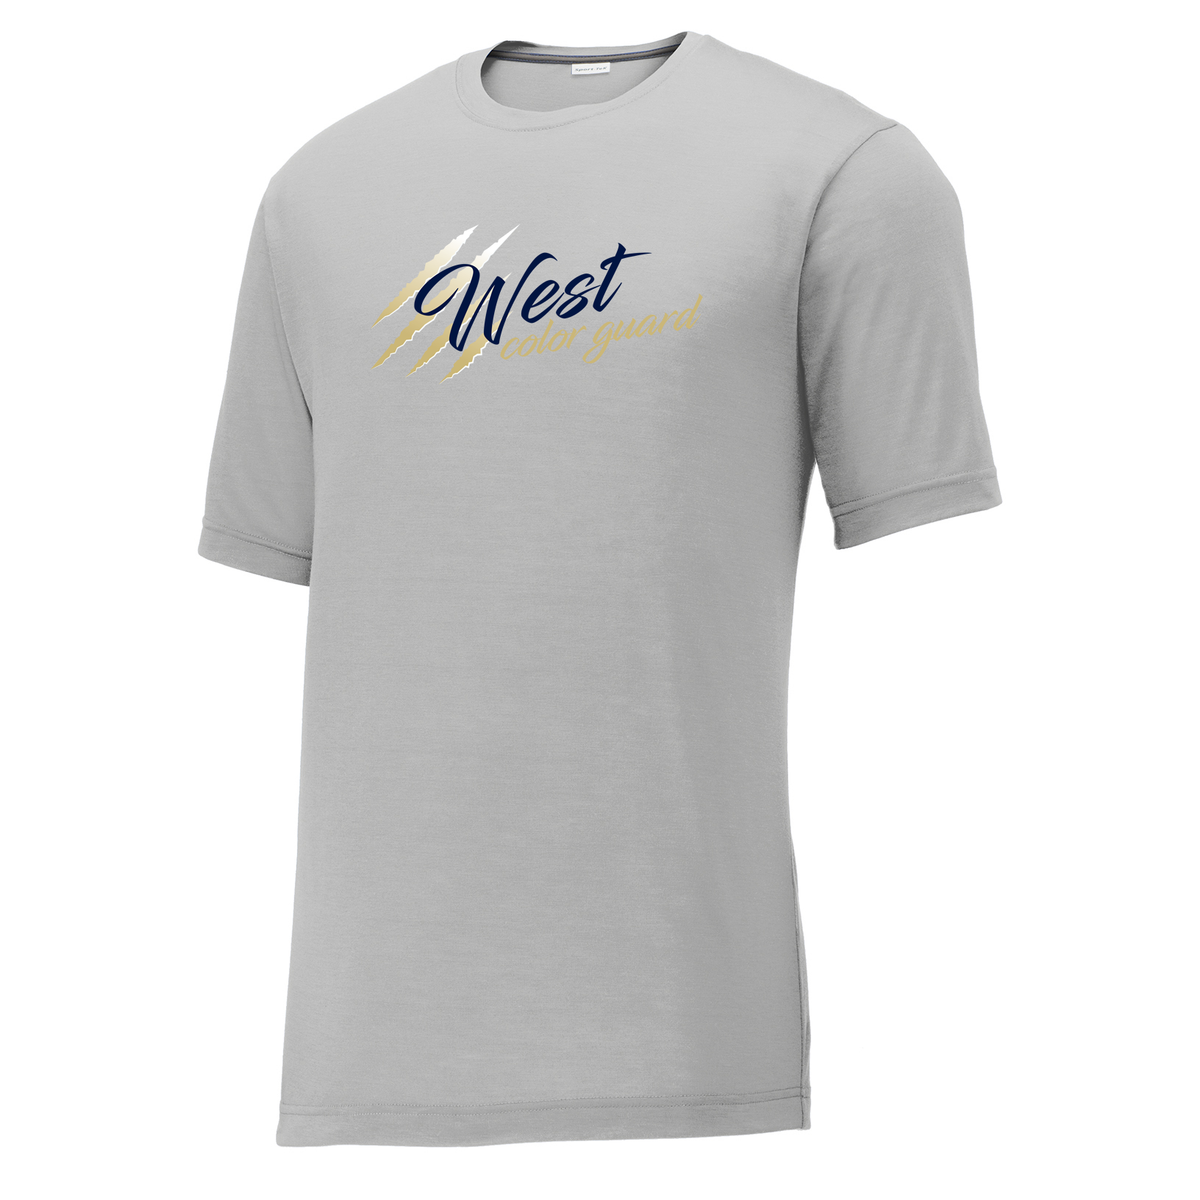 West Forsyth Color Guard  CottonTouch Performance T-Shirt